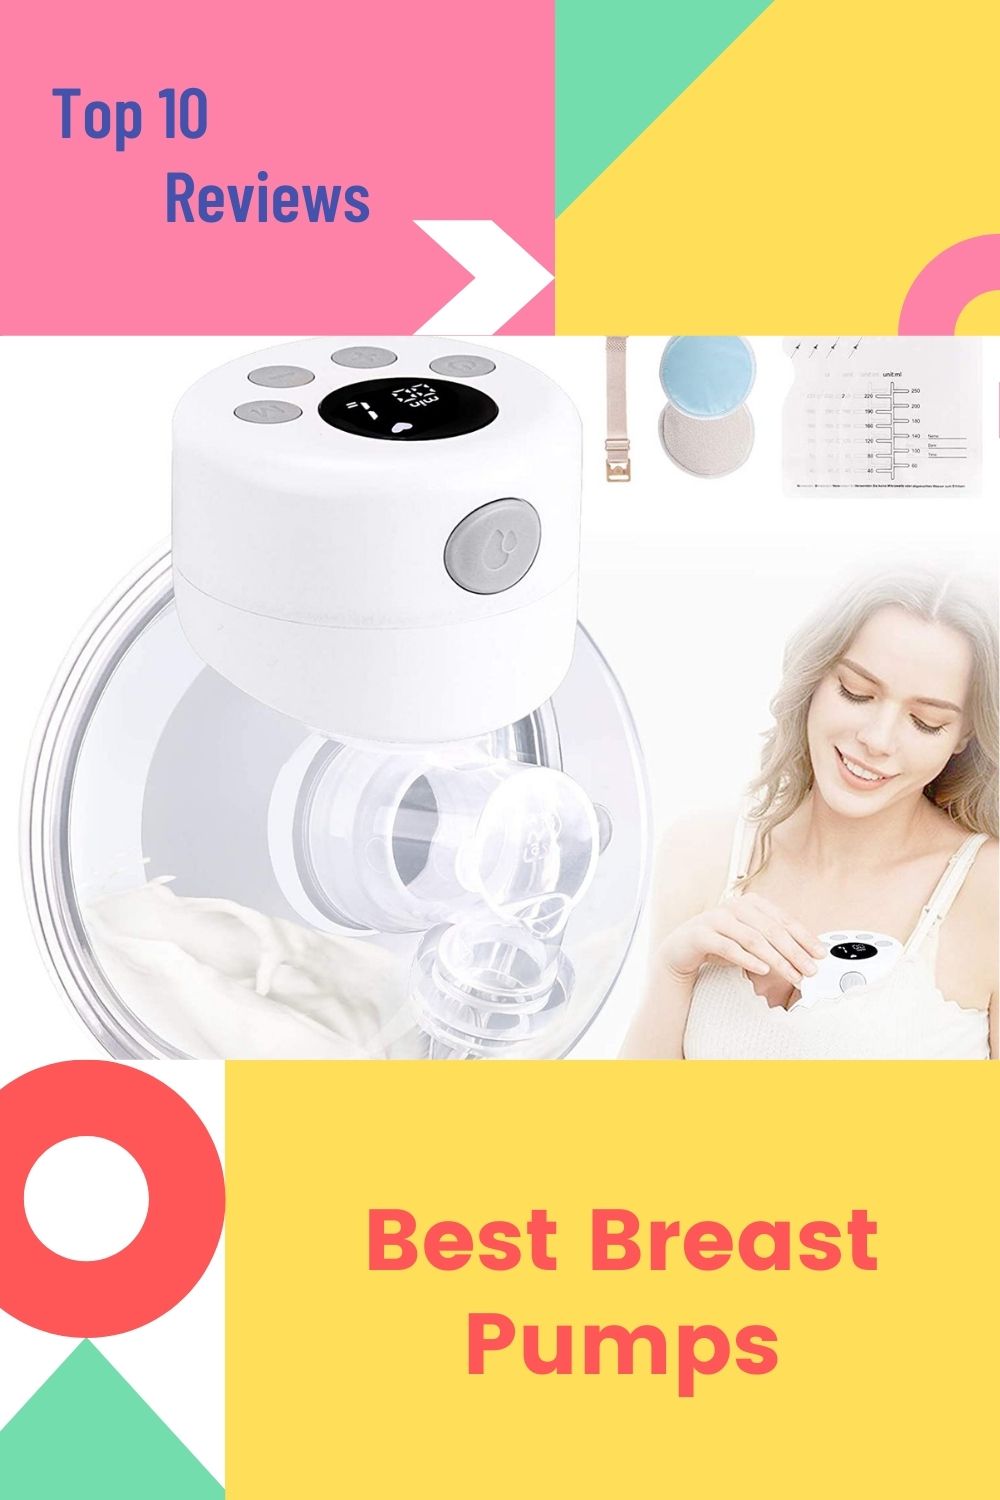 Top 10 Best Breast Pumps Reviews